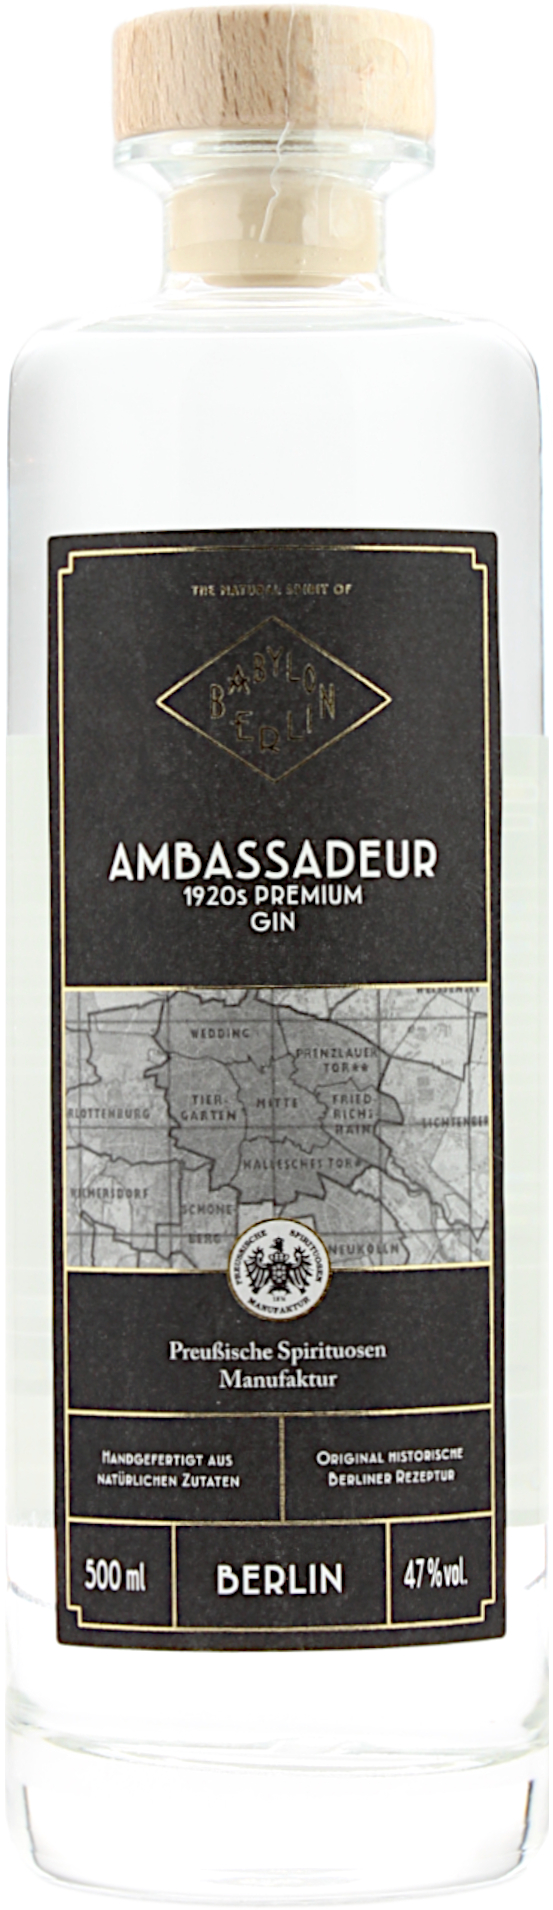 Babylon Berlin Ambassadeur 1920s Premium Gin 47.0% 0,5l